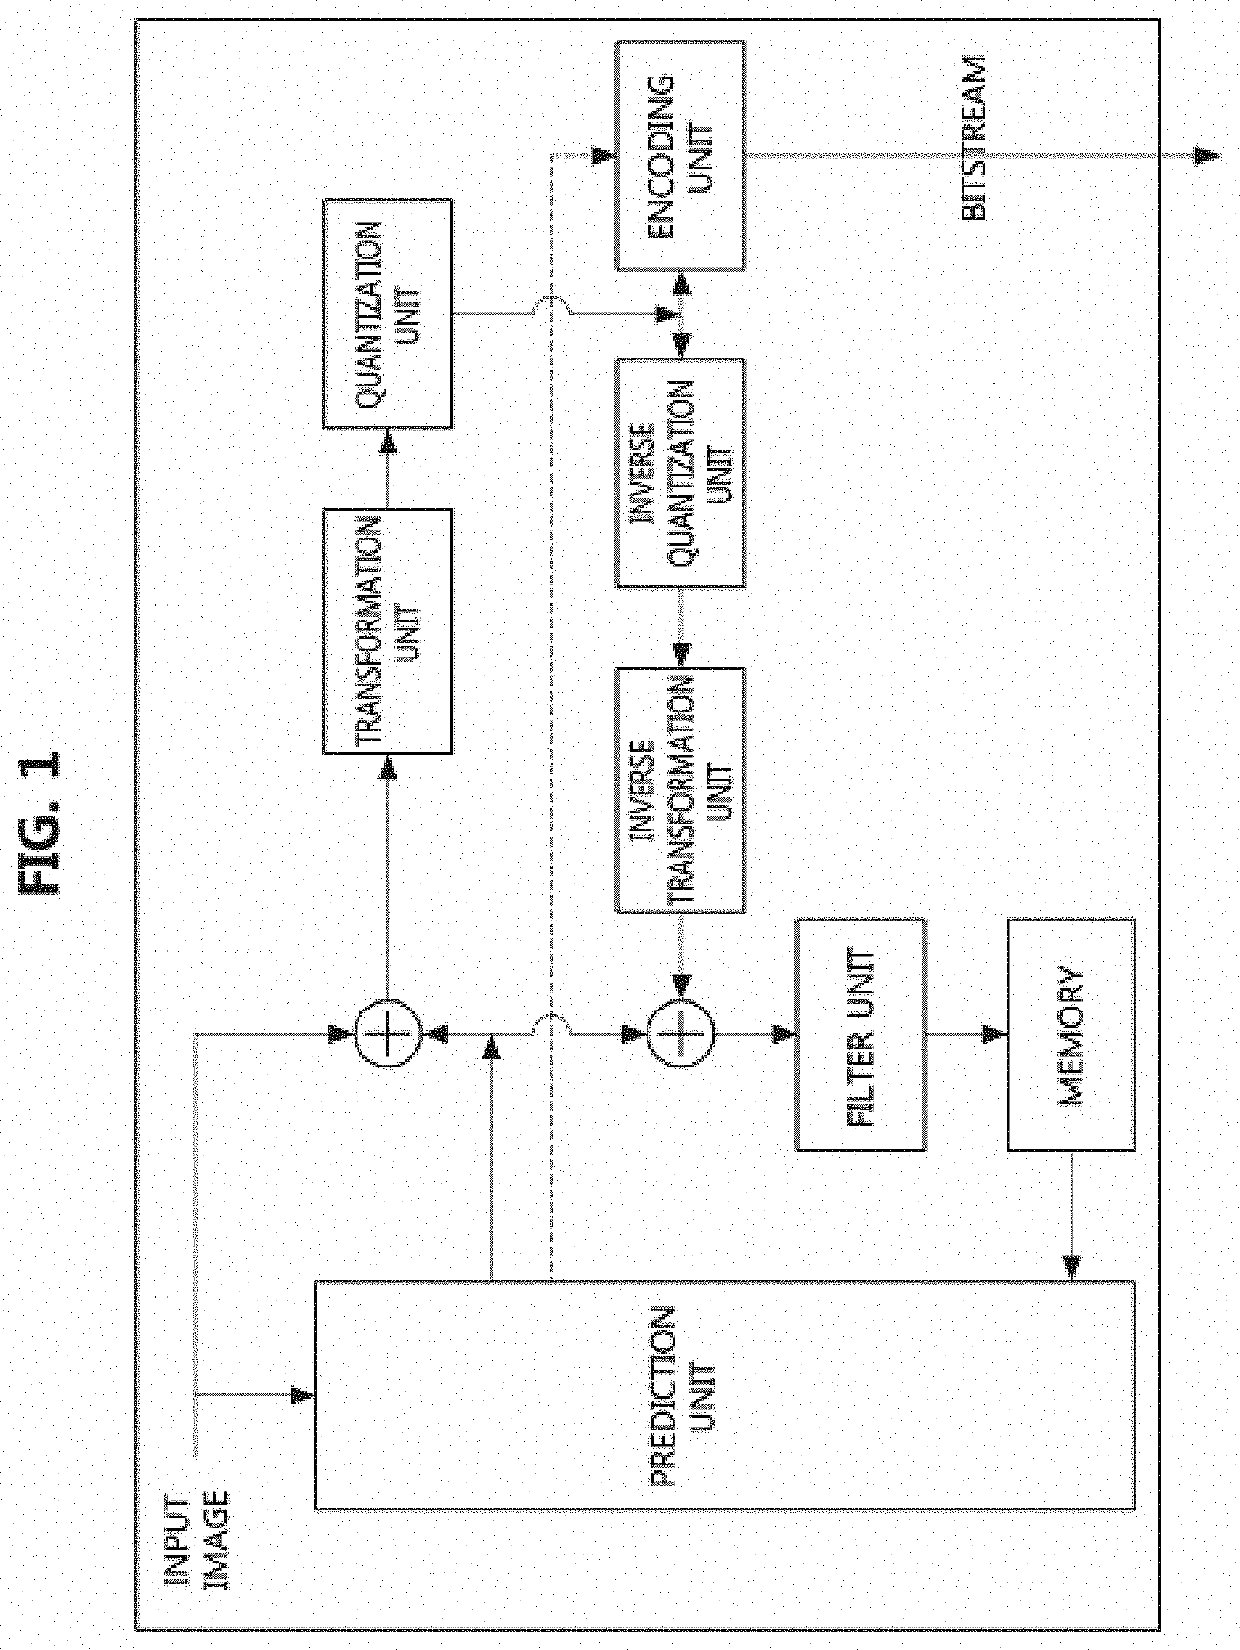 Image data encoding/decoding method and apparatus